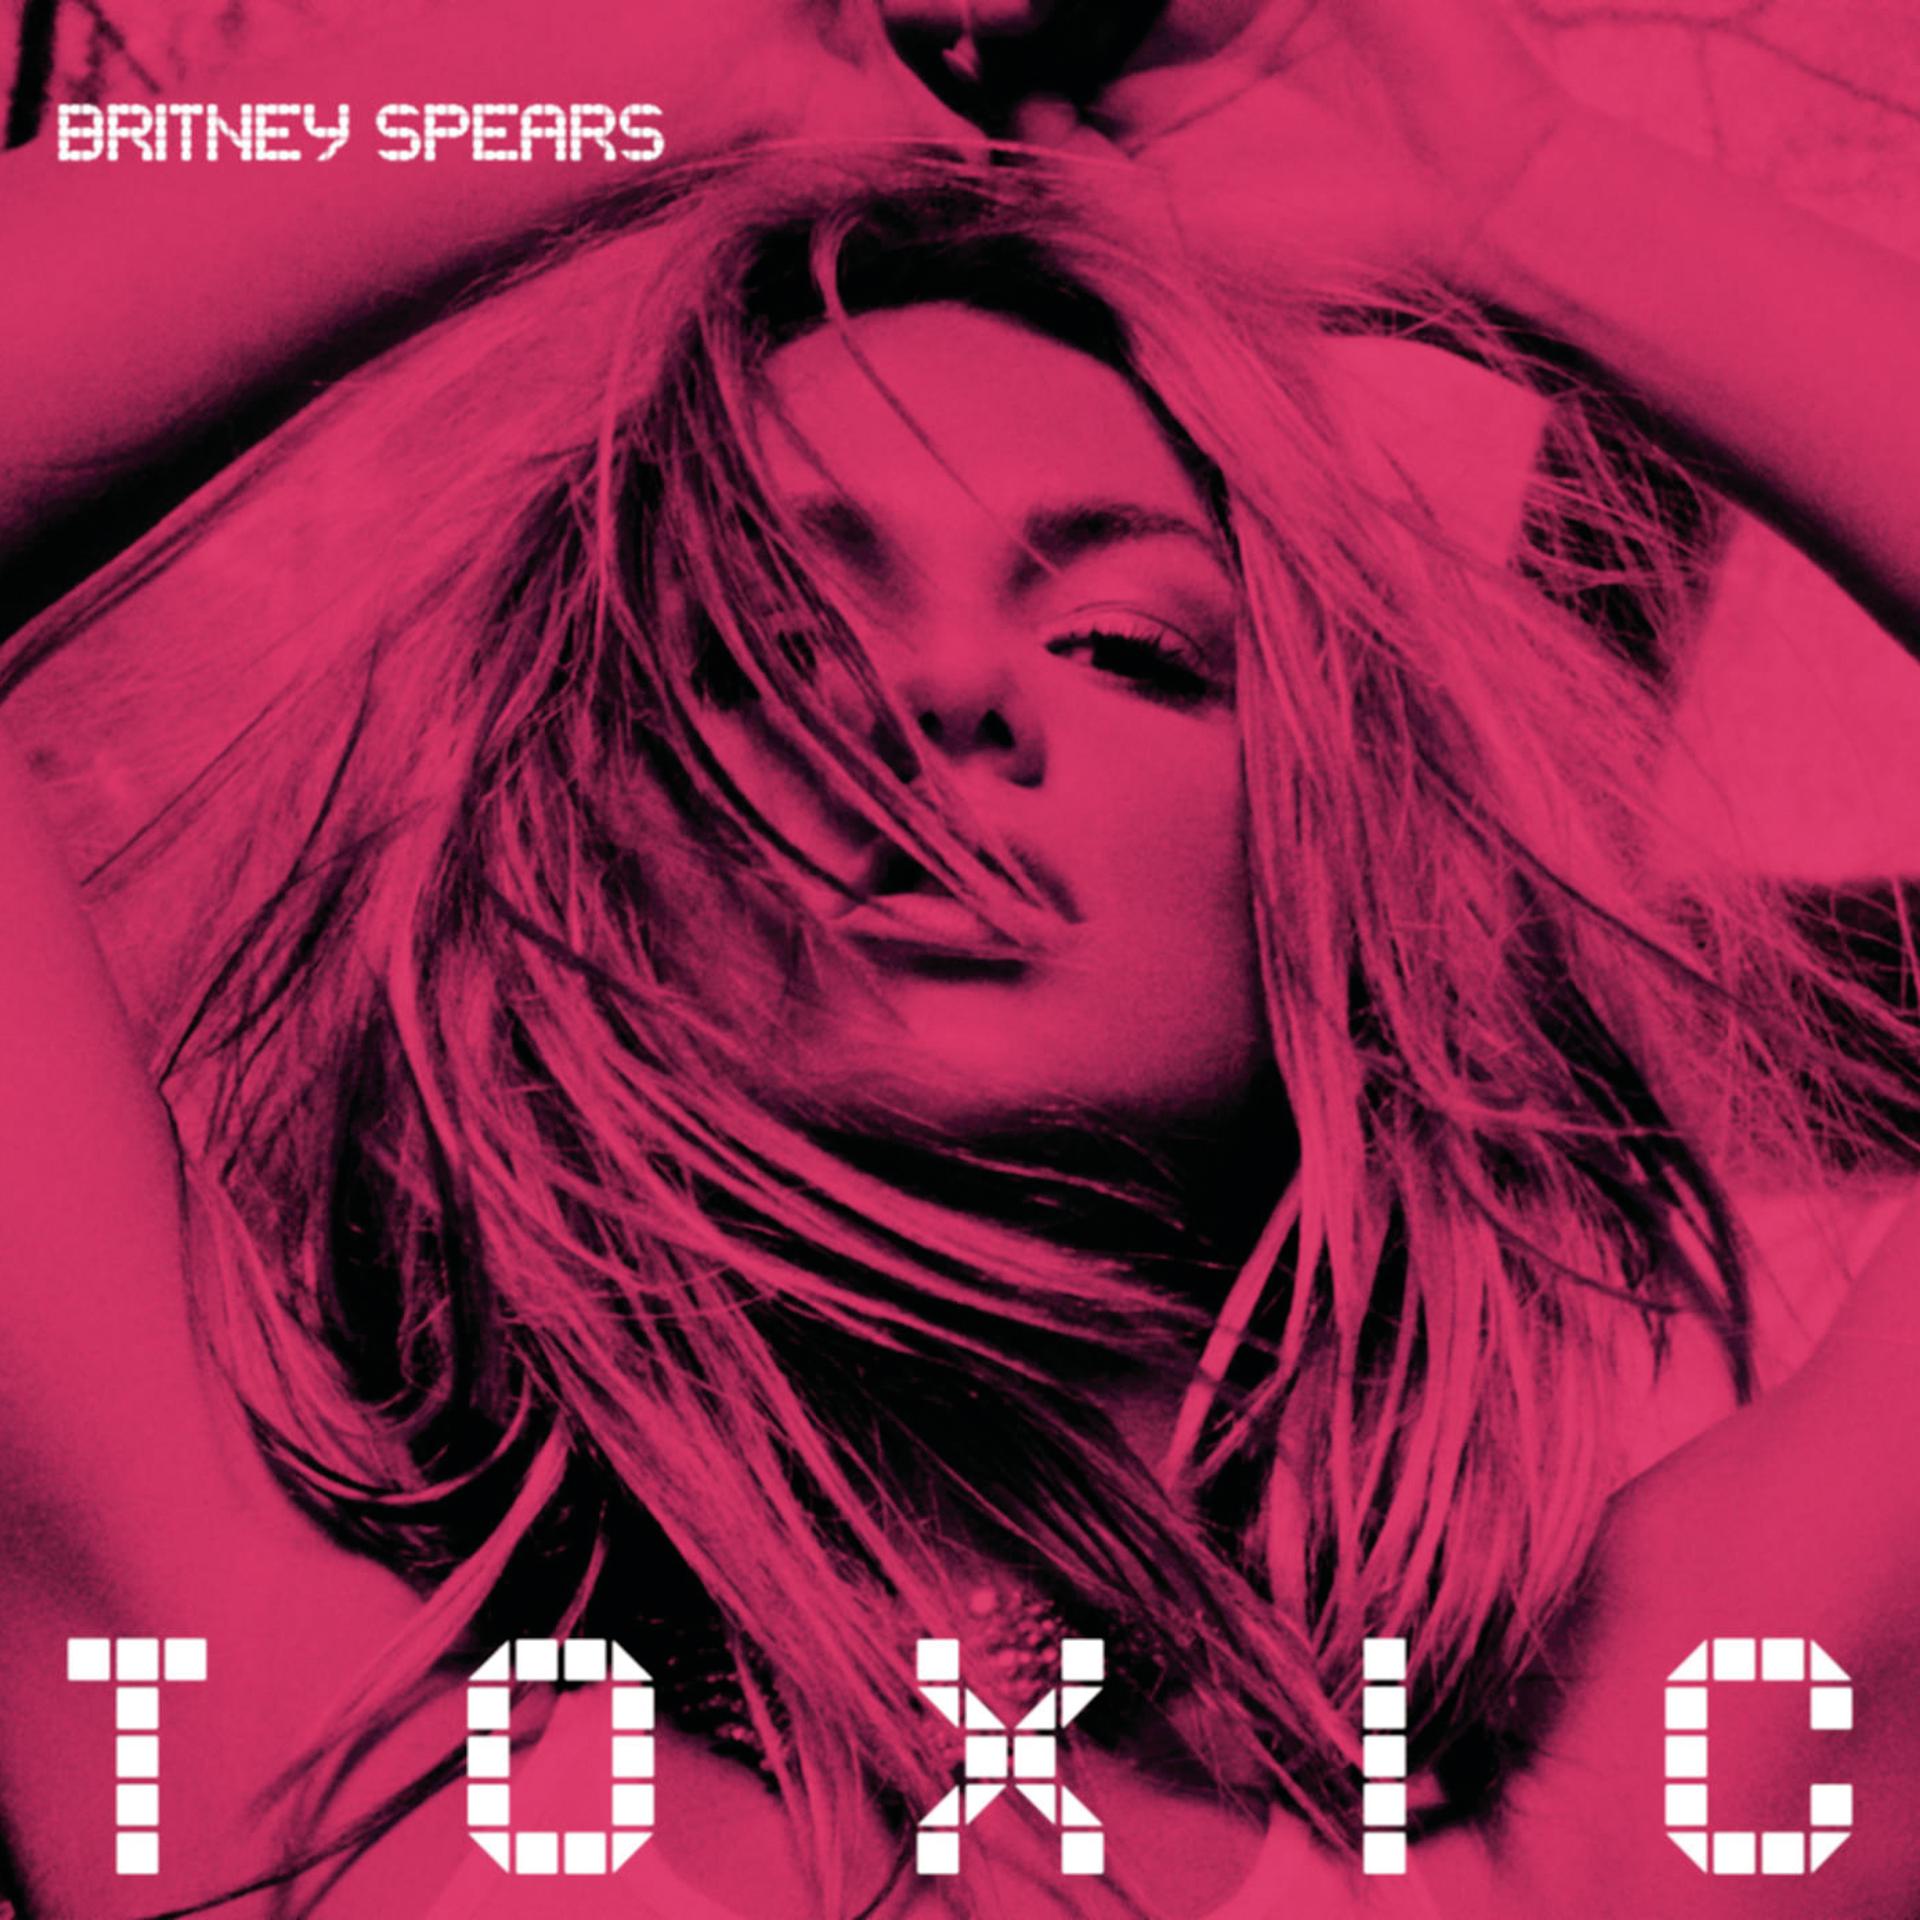 Toxic Бритни Спирс обложка. Britney Spears Toxic 2004. Бритни Спирс Токсик. Бритни Спирс обложка.